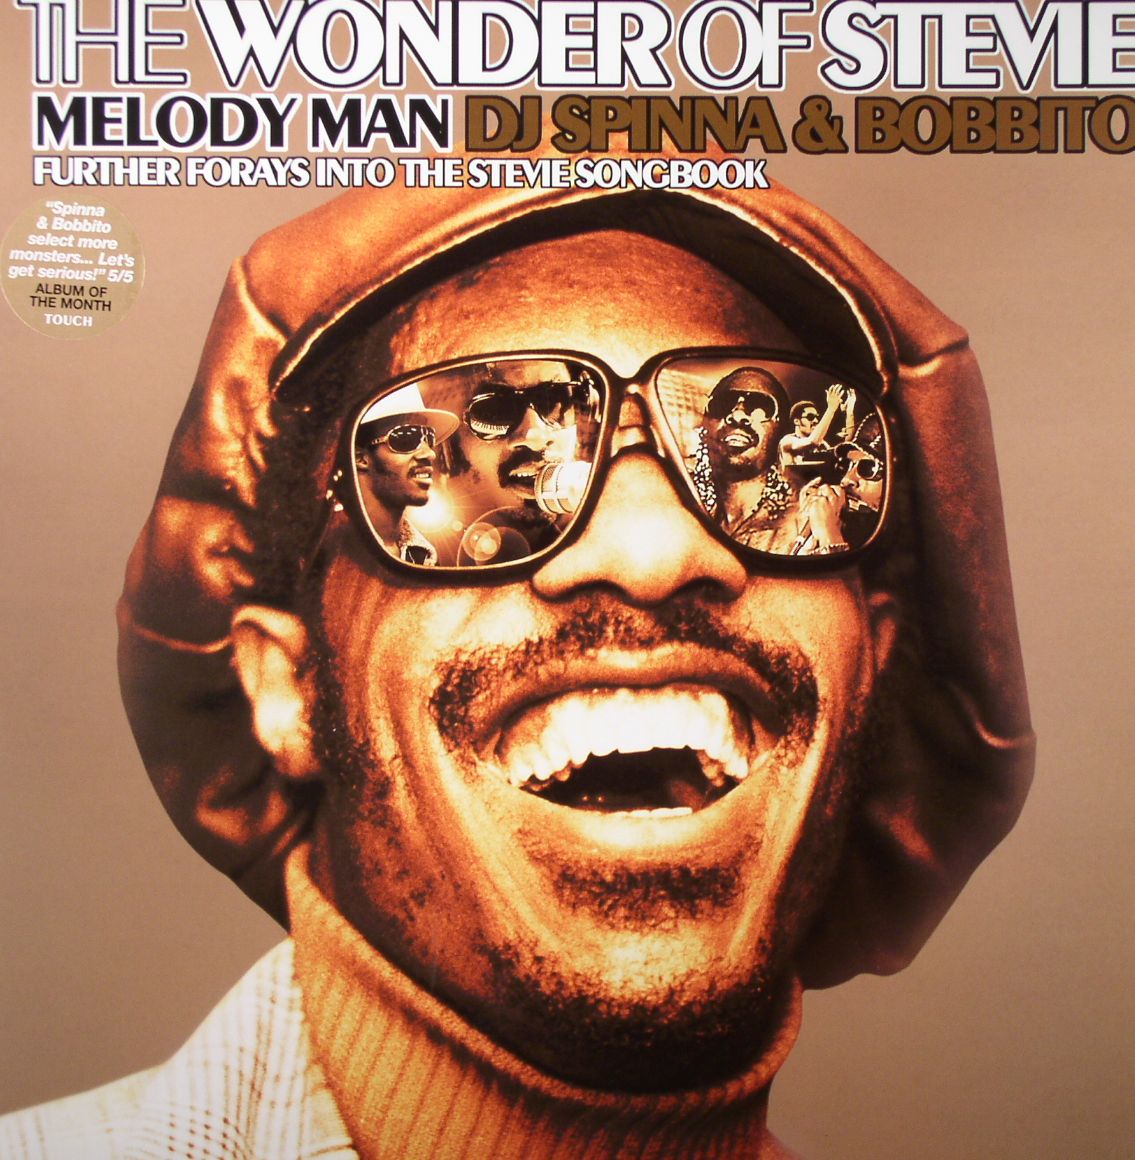 DJ SPINNA/BOBBITO/VARIOUS - The Wonder Of Stevie: Melody Man